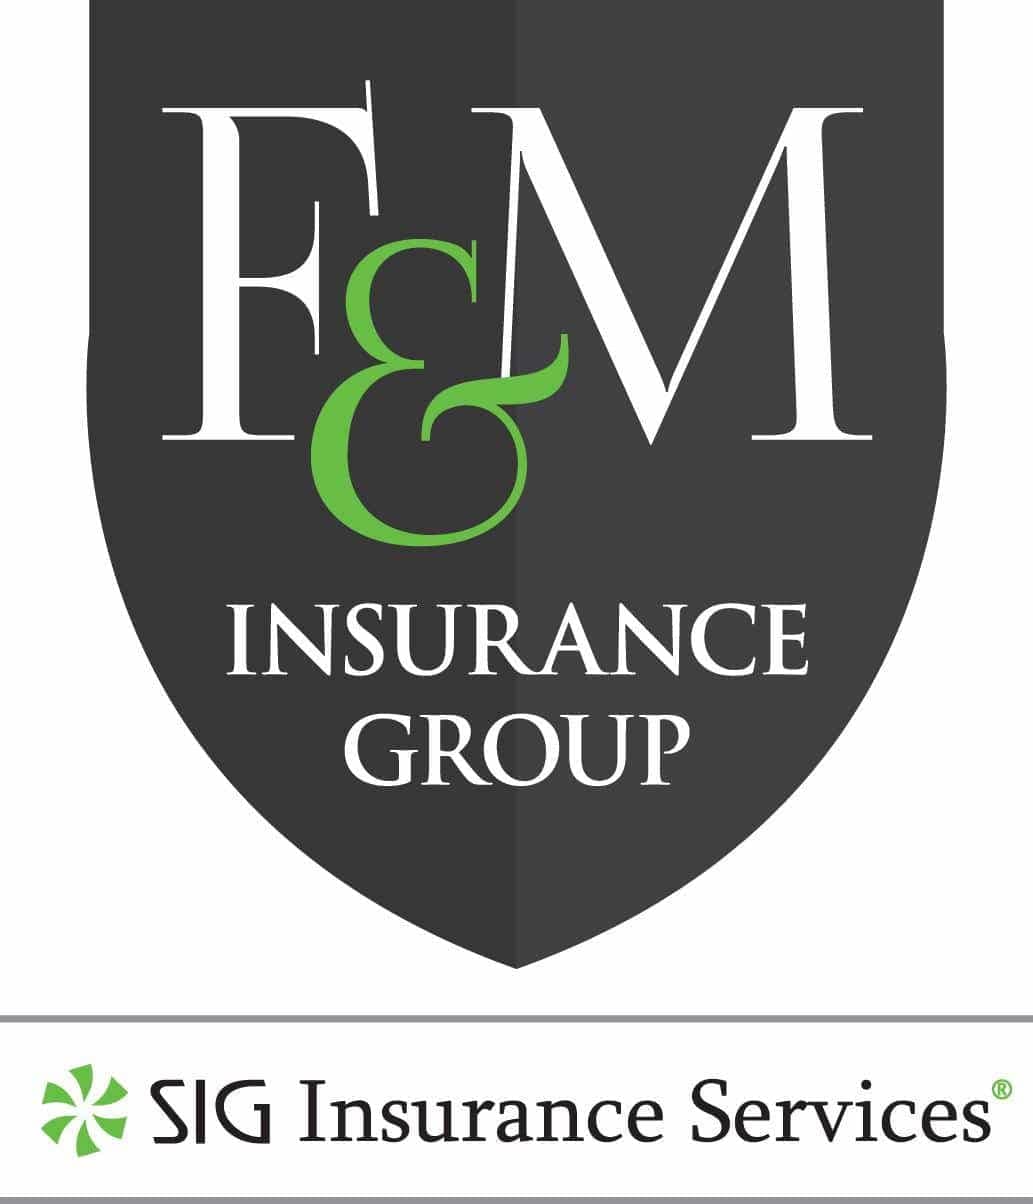 f&m insurance group logo